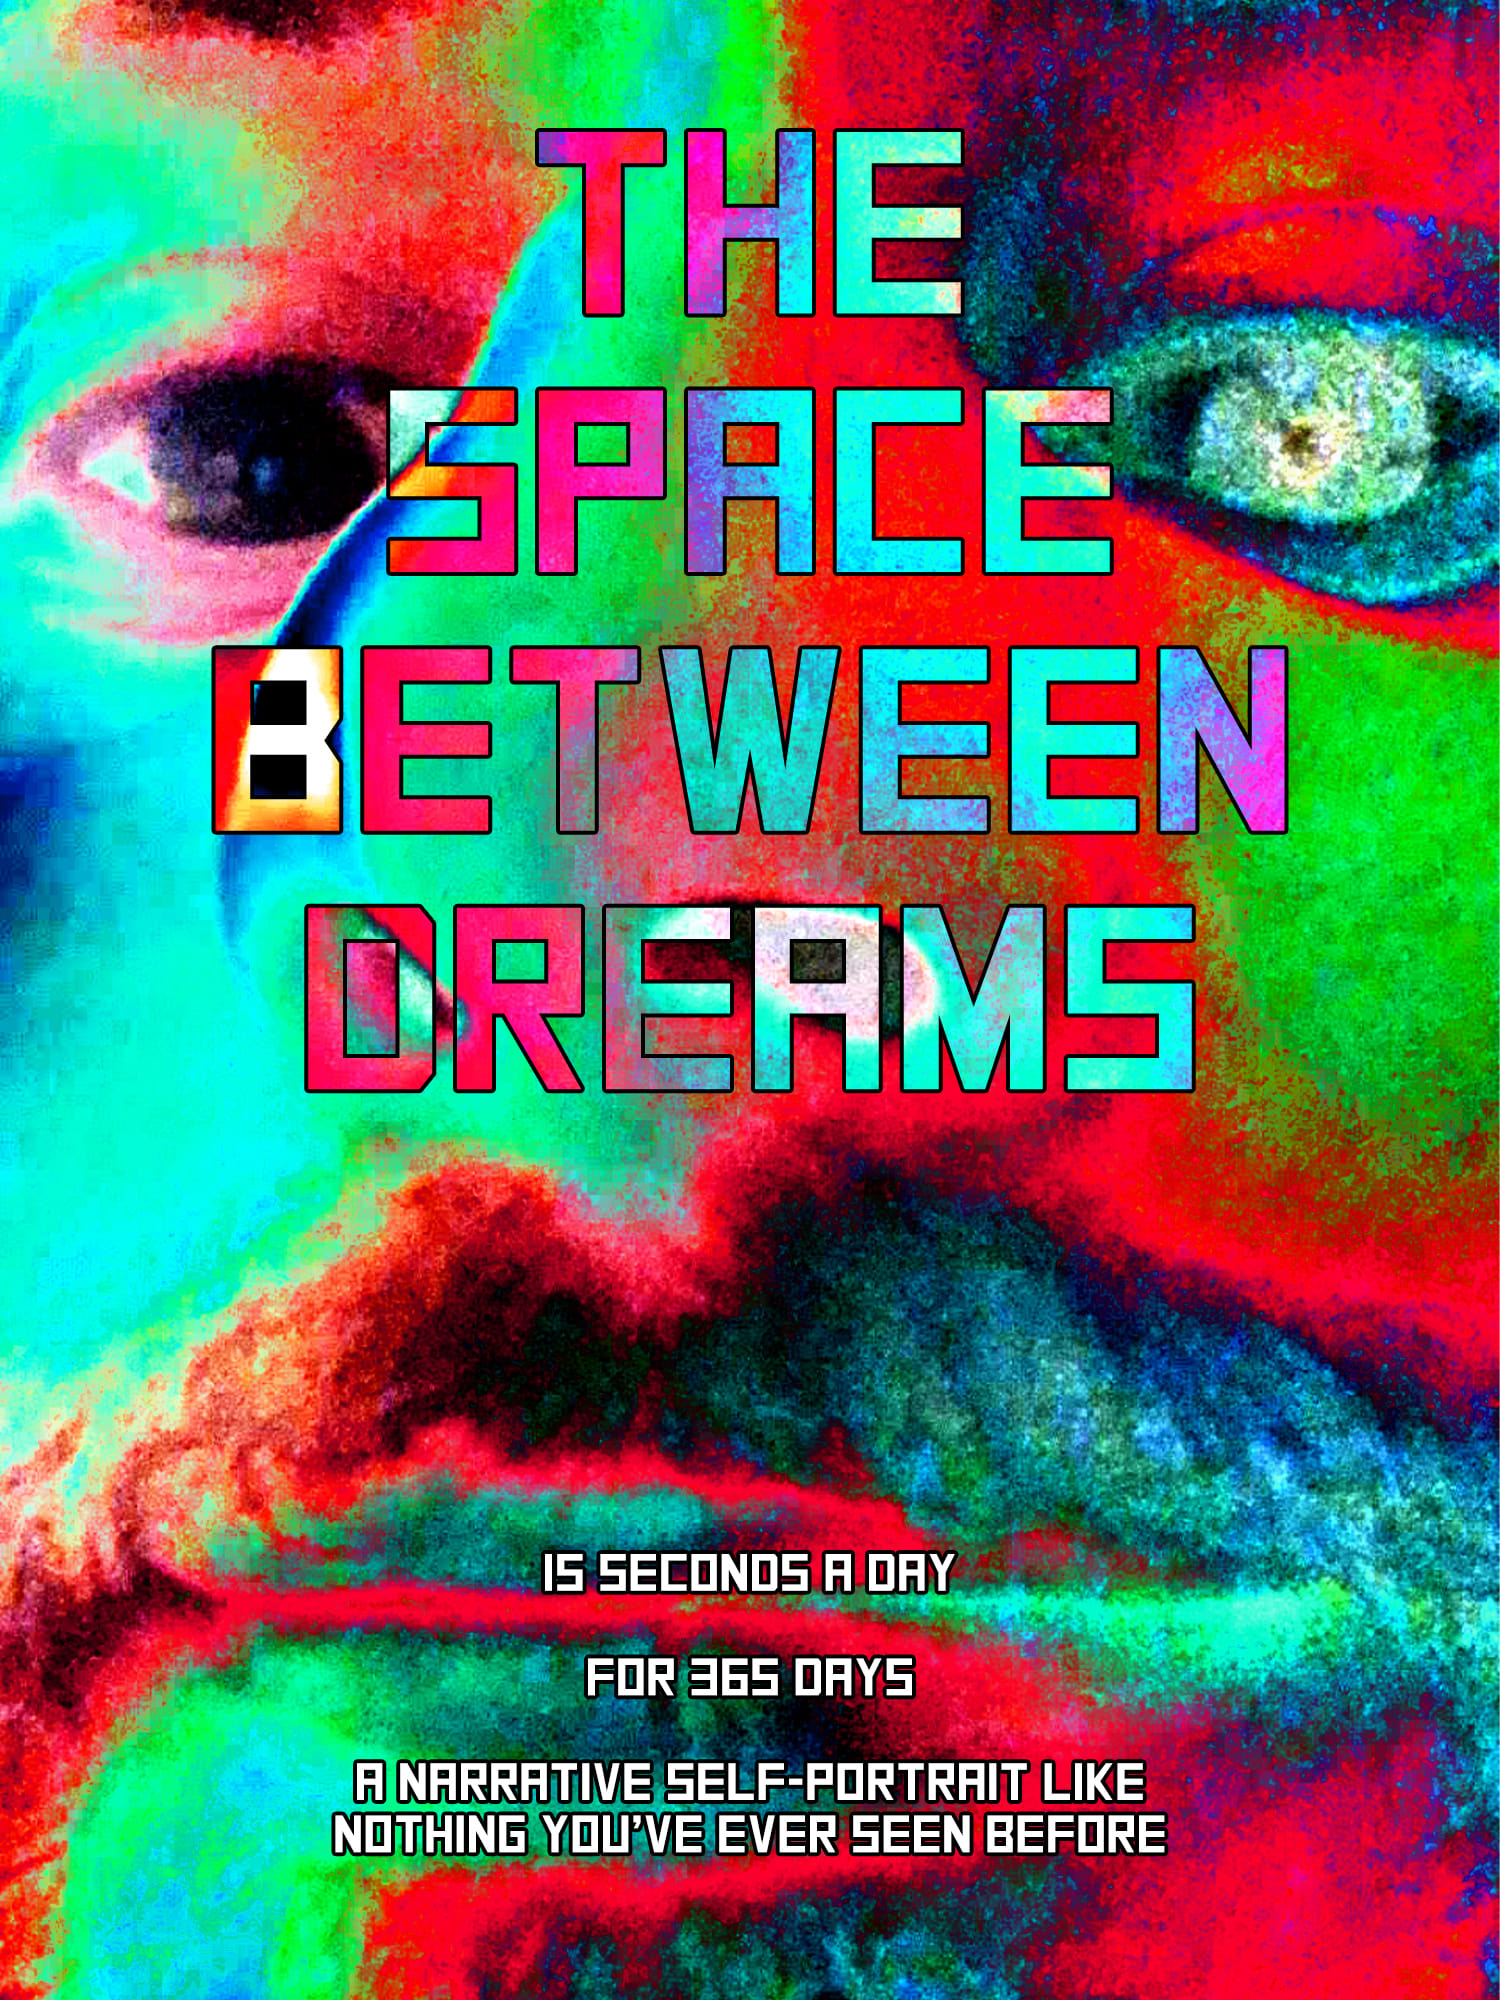 The Space Between Dreams